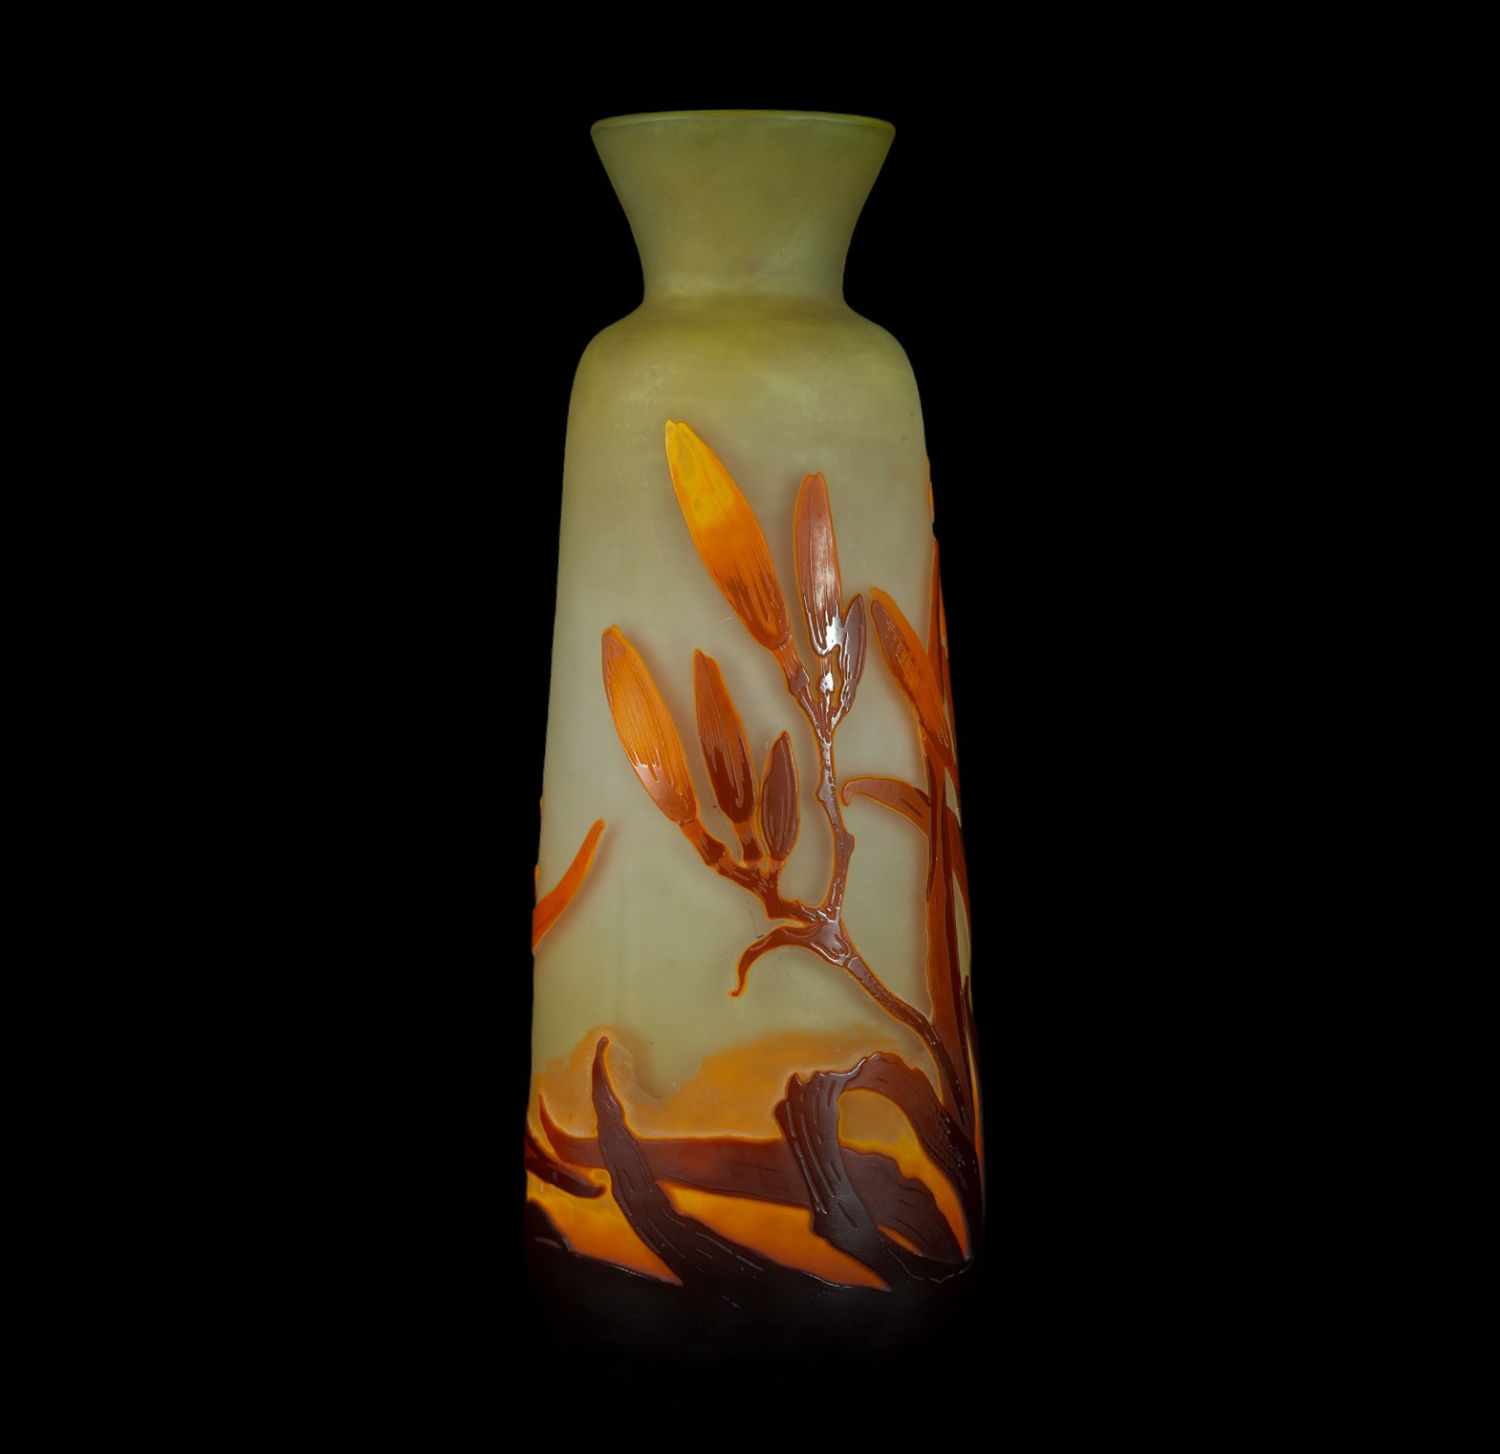 Large Art Nouveau Gallé vase in blown glass and polychrome vitreous paste, 1900s - 1920s - Image 5 of 6